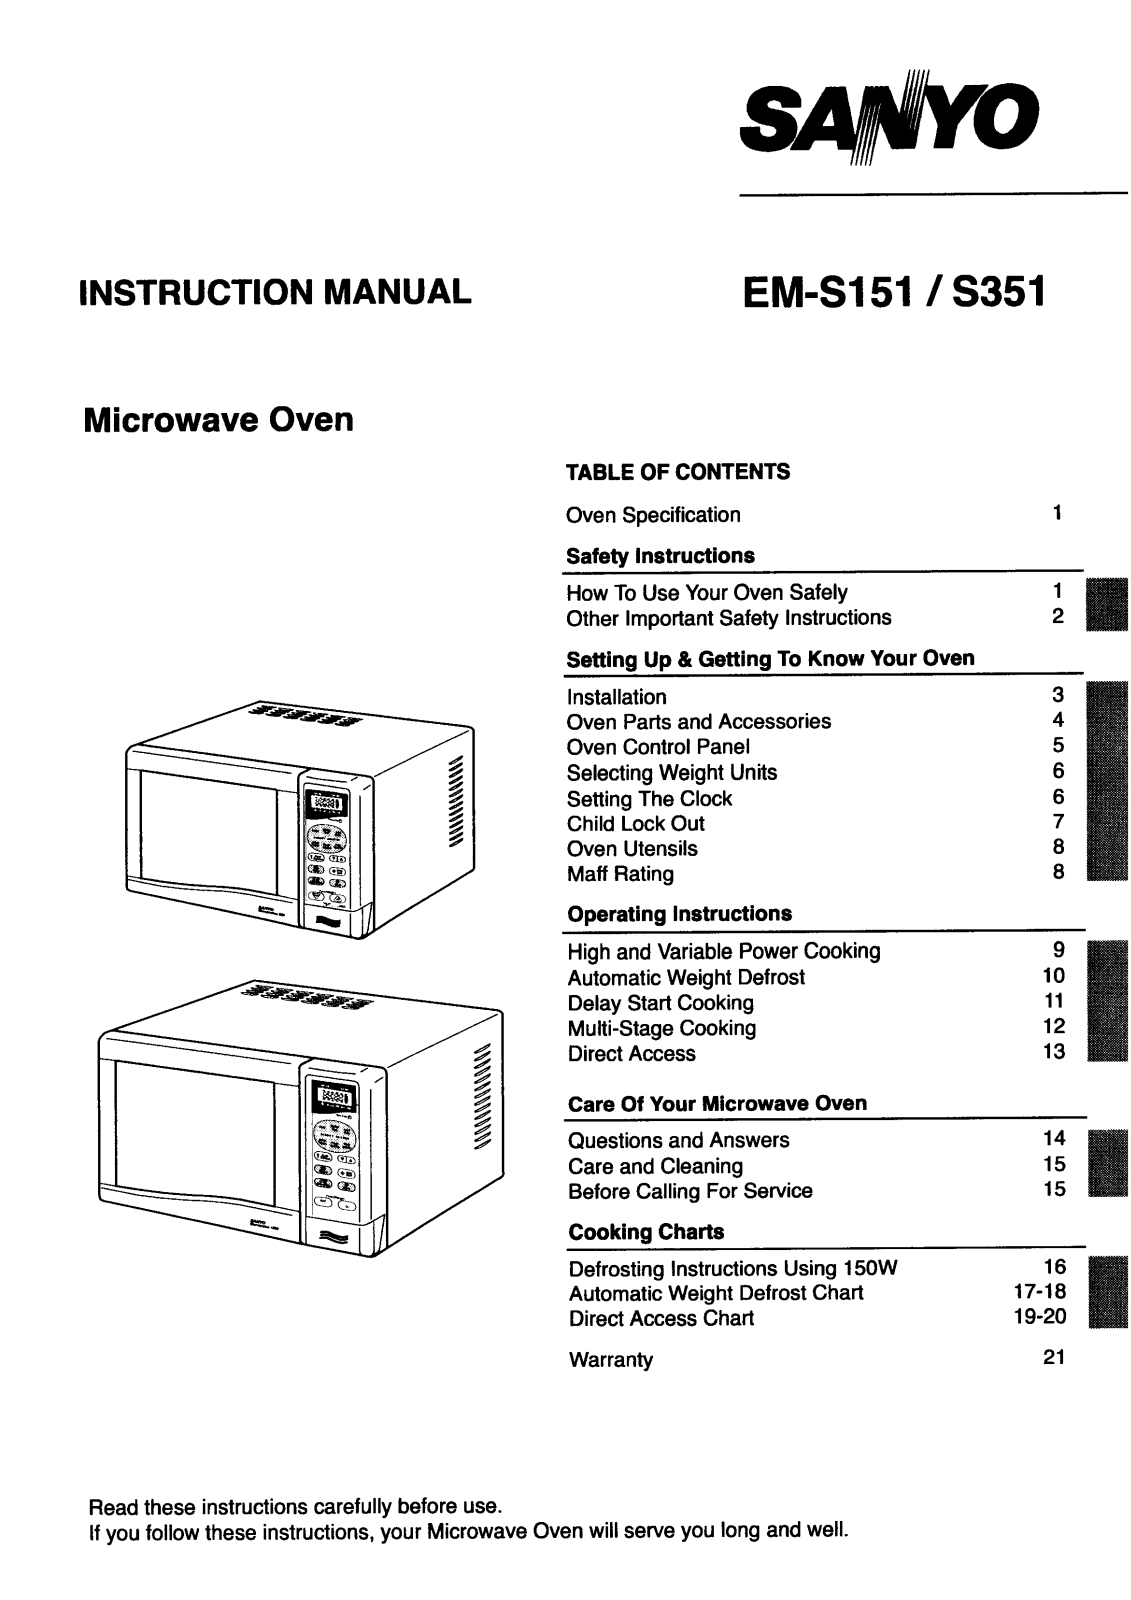 Sanyo EM-S151 Instruction Manual